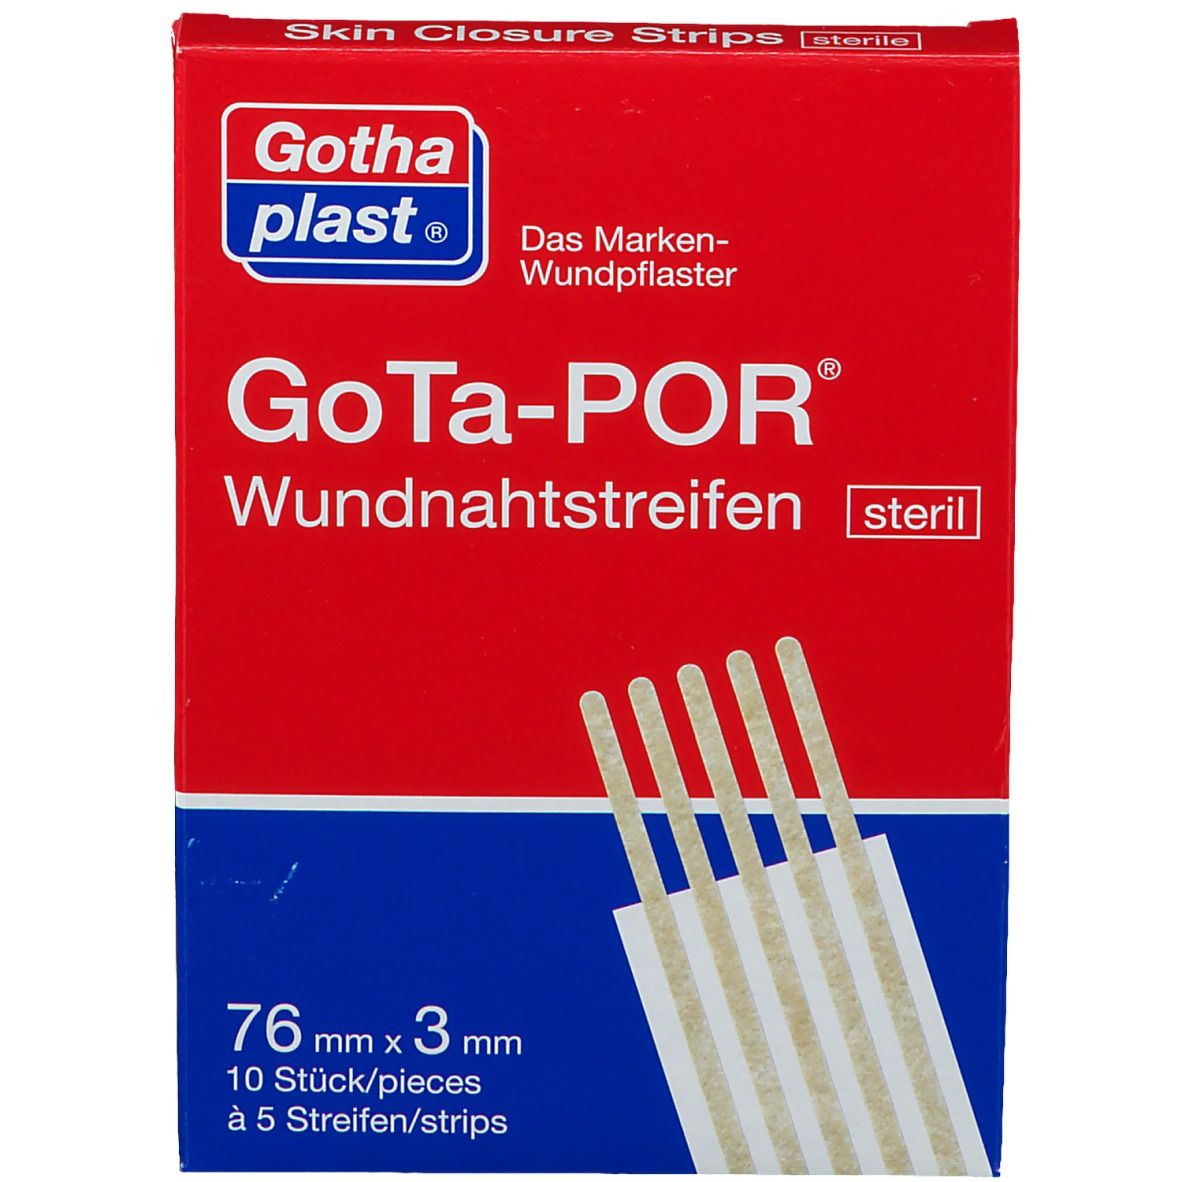 GoTa-POR® Wundnahtstreifen steril 76 mm x 3 mm